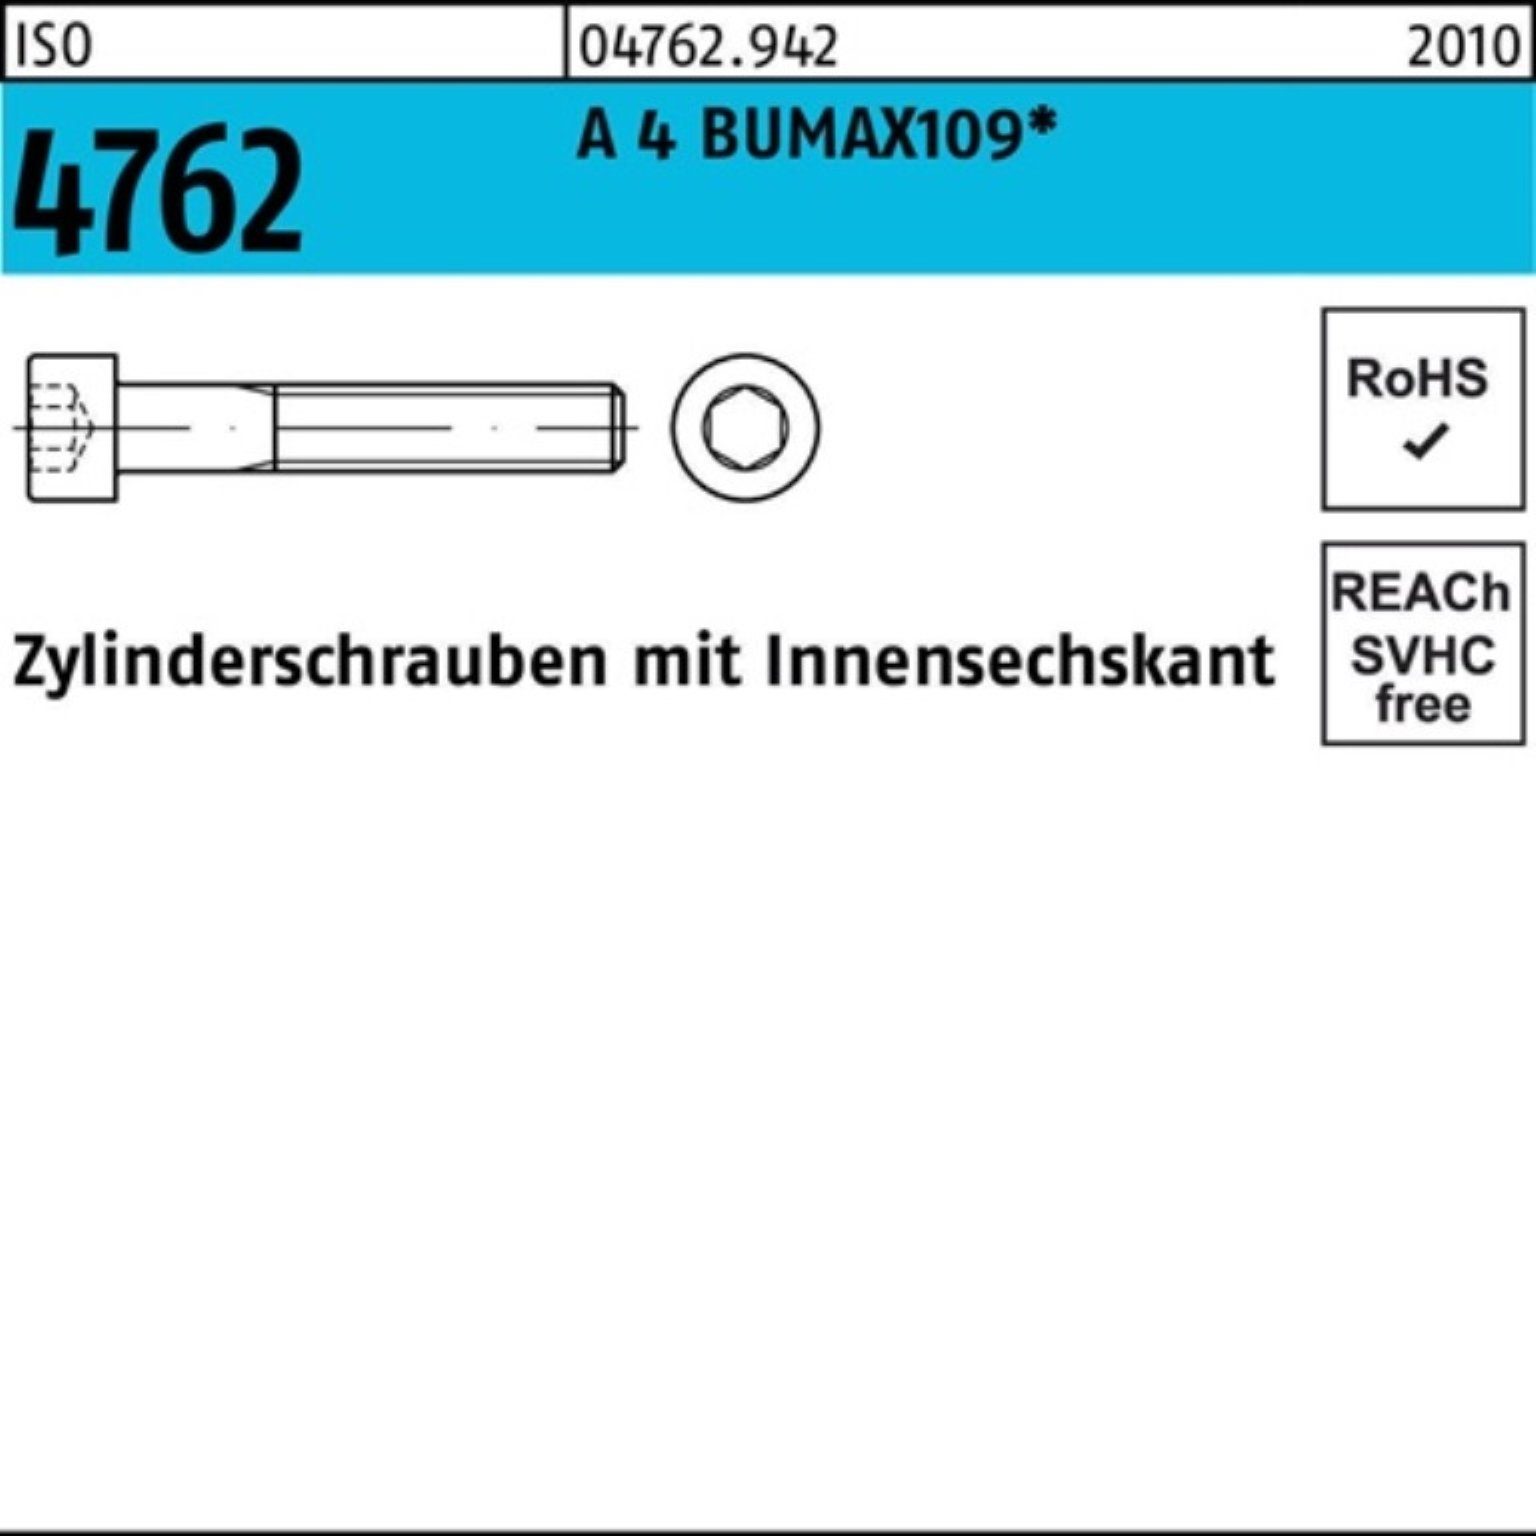 Bufab Zylinderschraube 100er Pack M10x 4 60 4762 50 Zylinderschraube Innen-6kt ISO BUMAX109 A